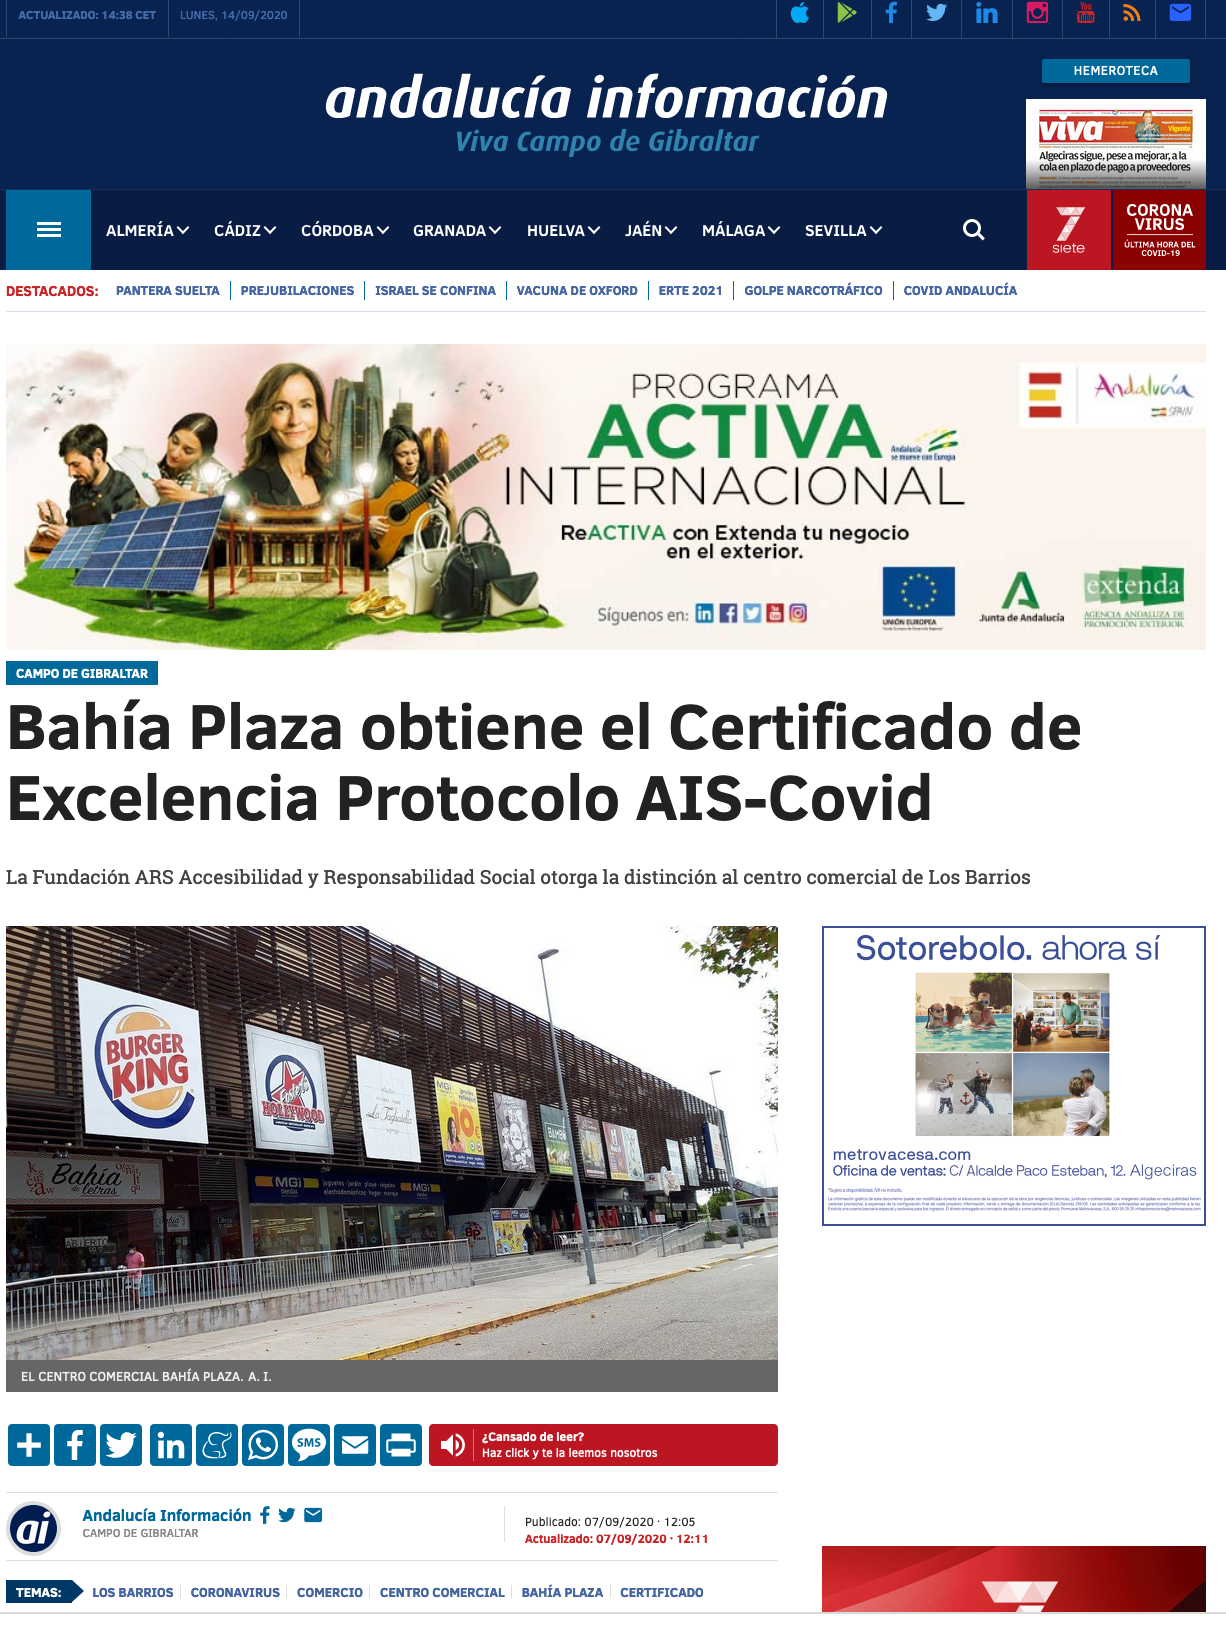 Noticia publicada en Andalucía Información